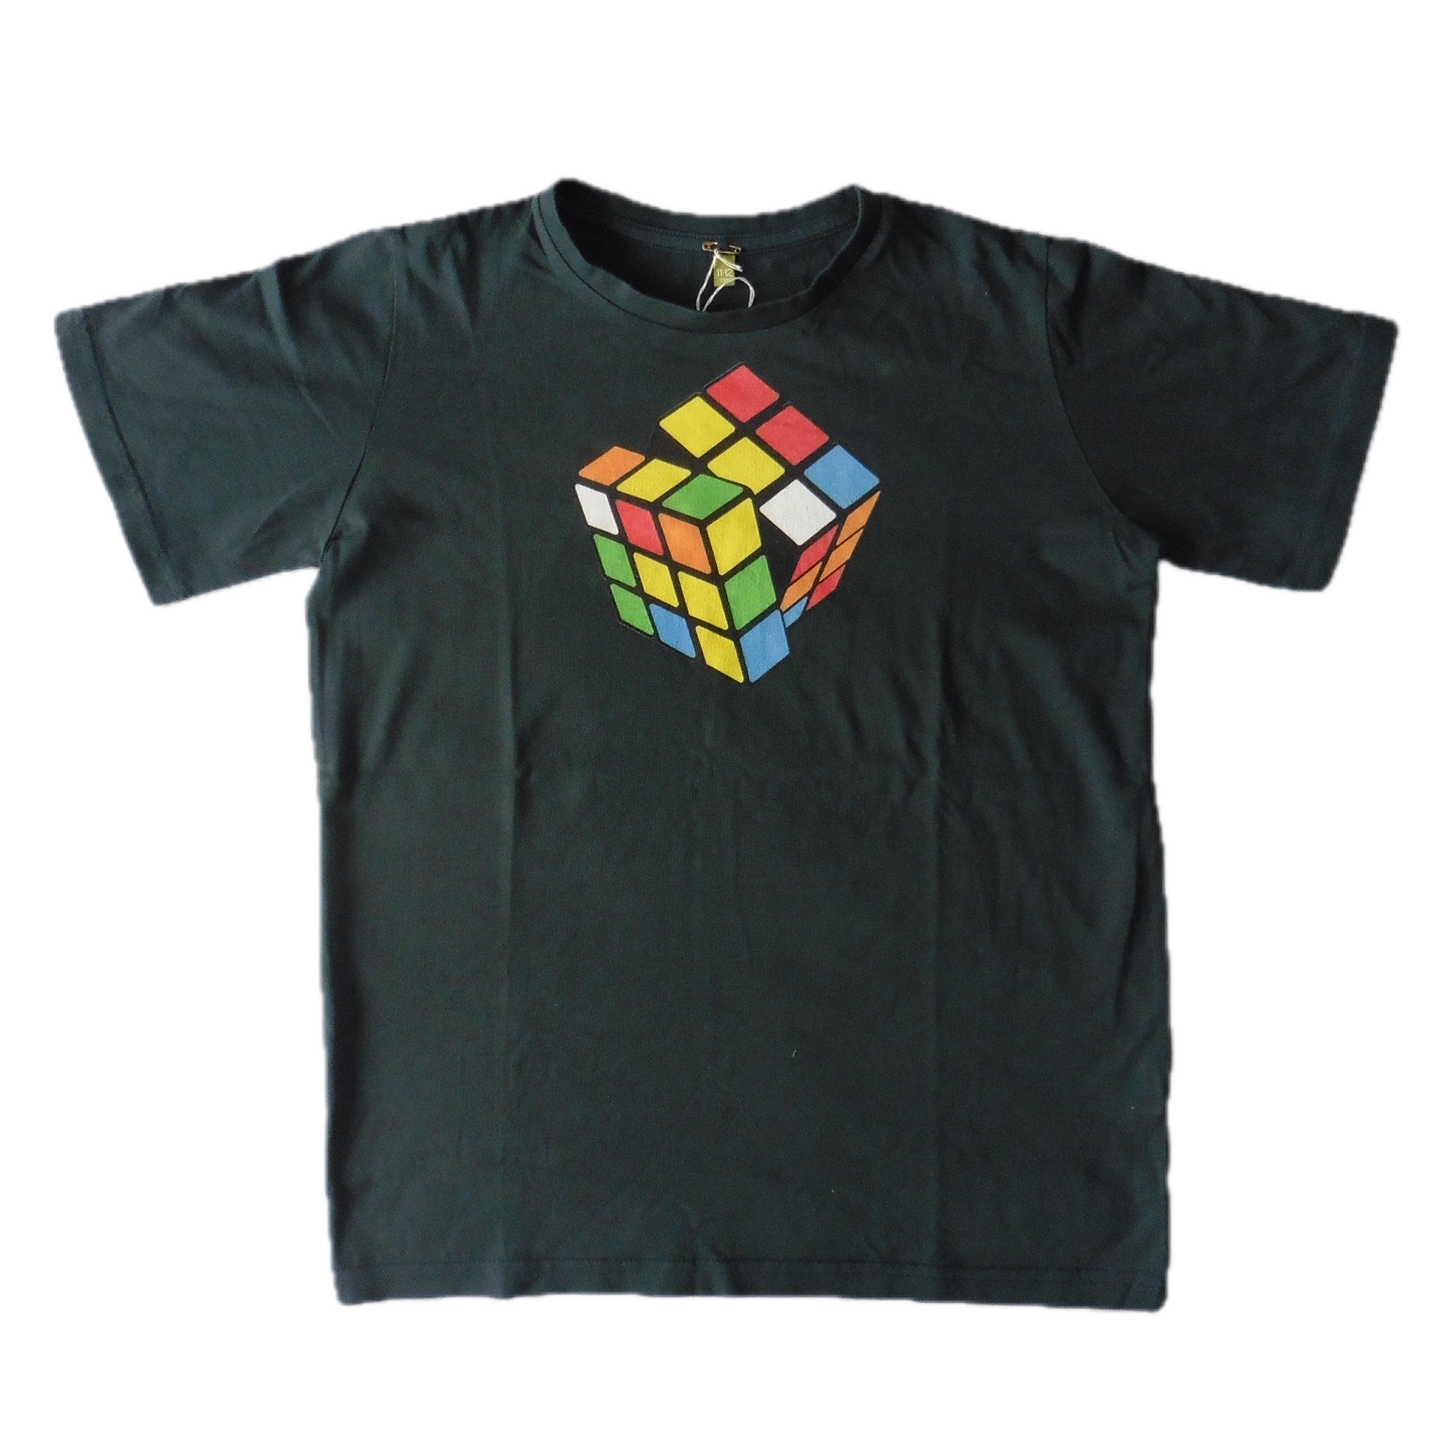 TeeMill Khaki with Rubix Cube Print 11-12y